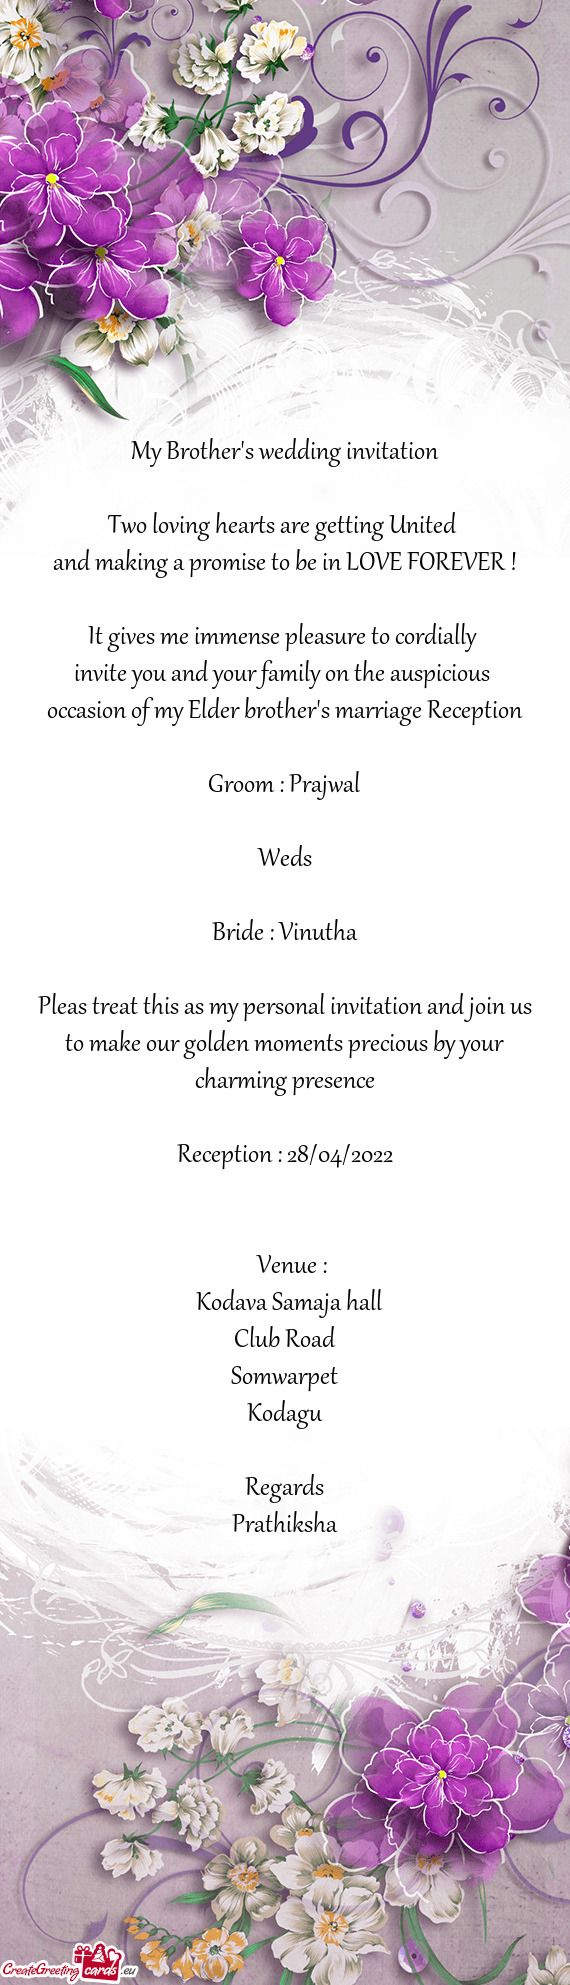 Bride : Vinutha